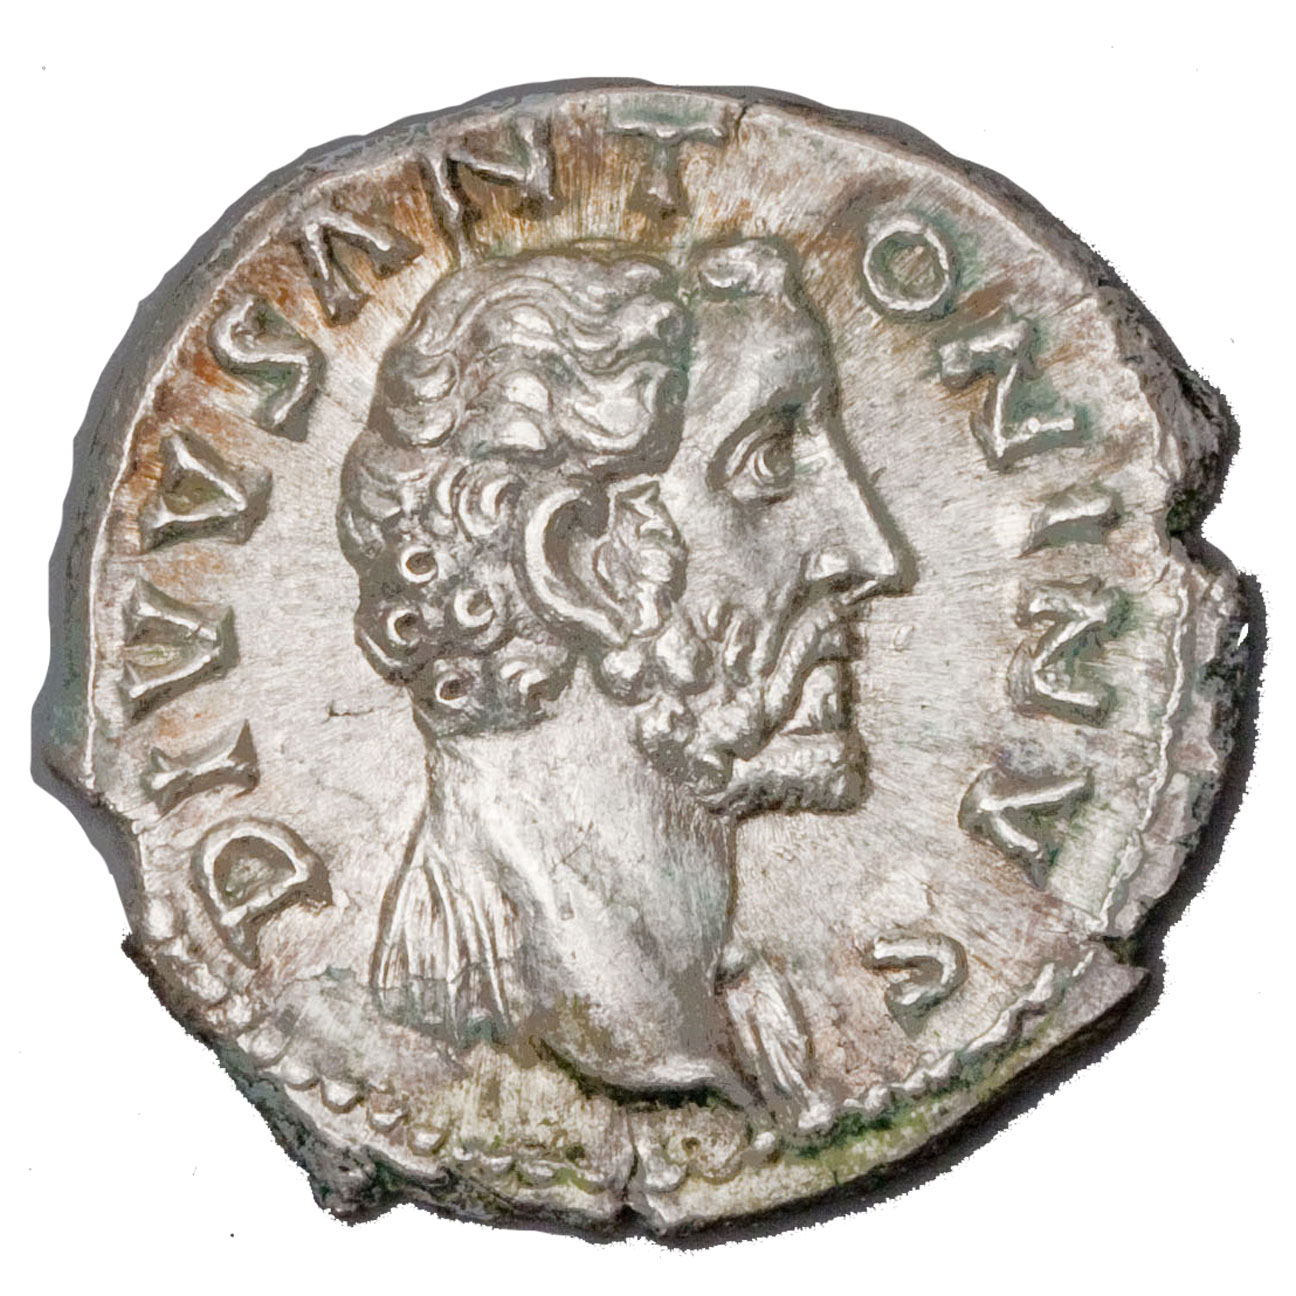 http://www.dartmouth.edu/~yaleart/objects/coins/denarius-of-antoninus-pius-consecratio/hma_2005-24-2_o/